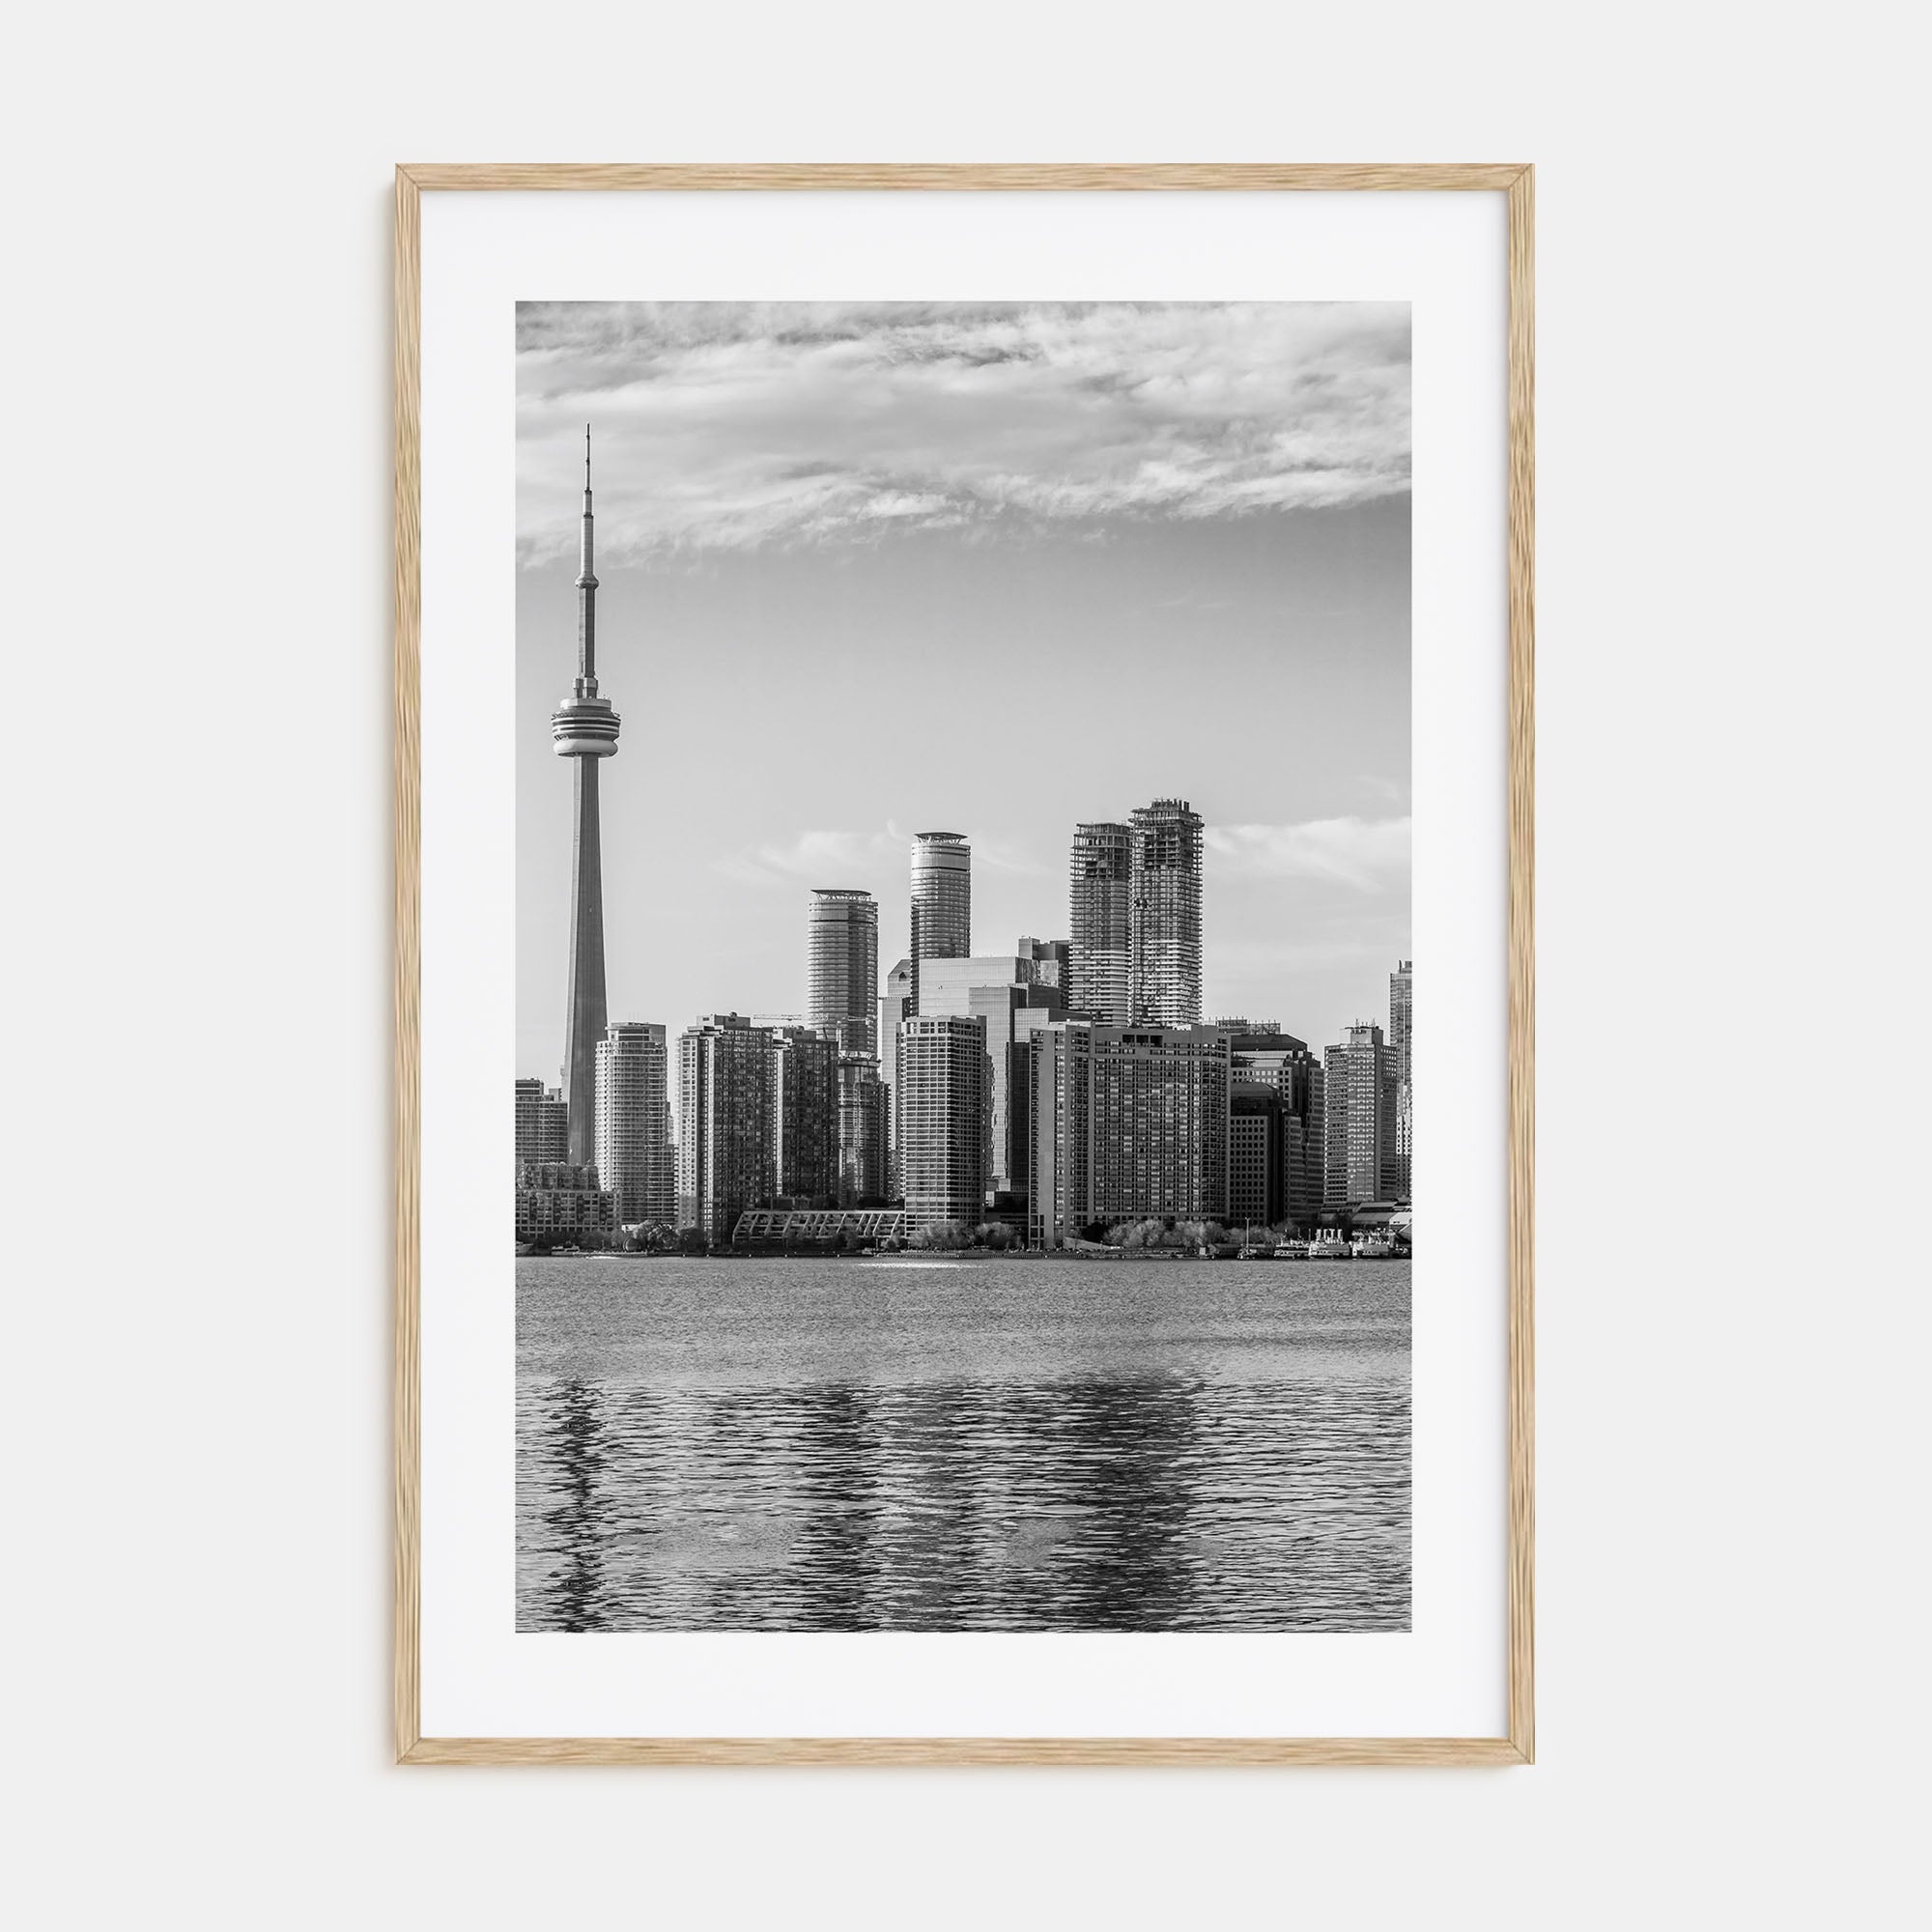 Toronto Photo B&W No 1 Poster